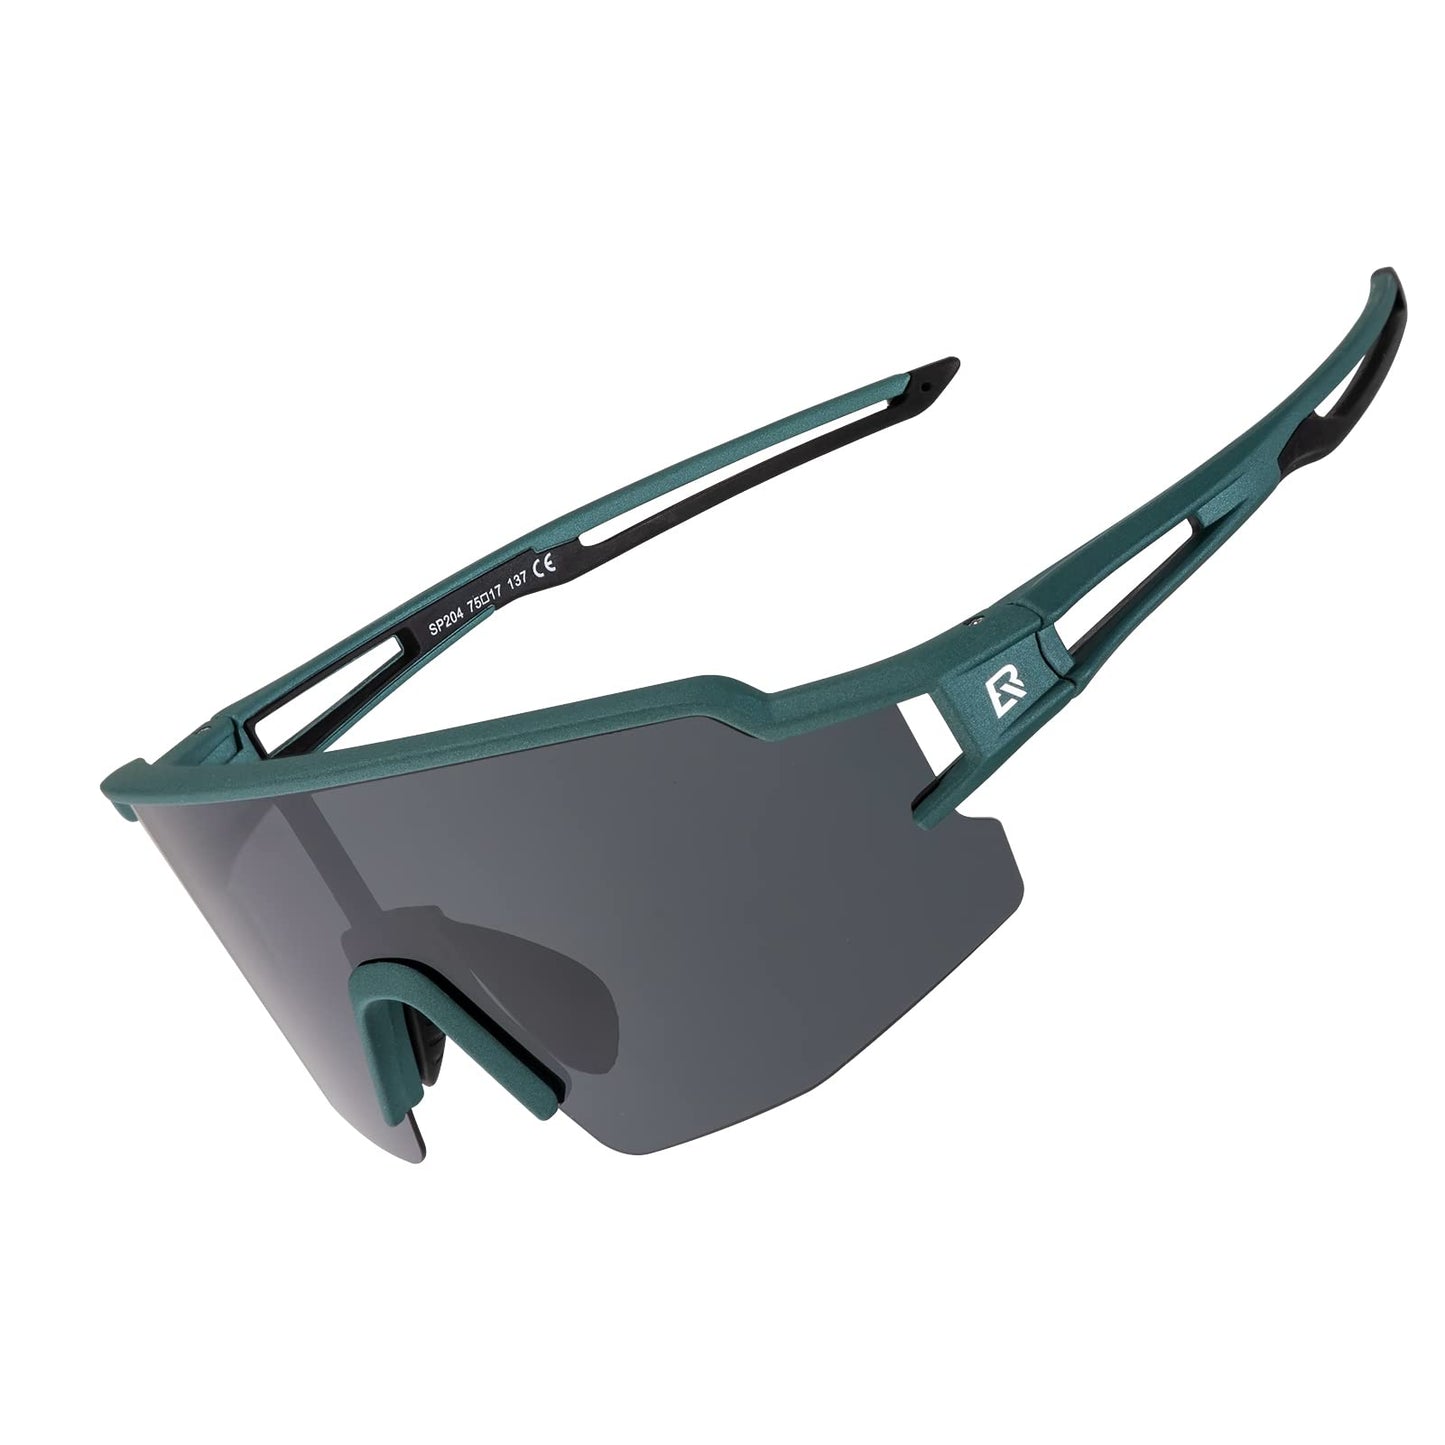 ROCKBROS Unisex Adult 10171/Usnew Sunglasses (pack of 1)